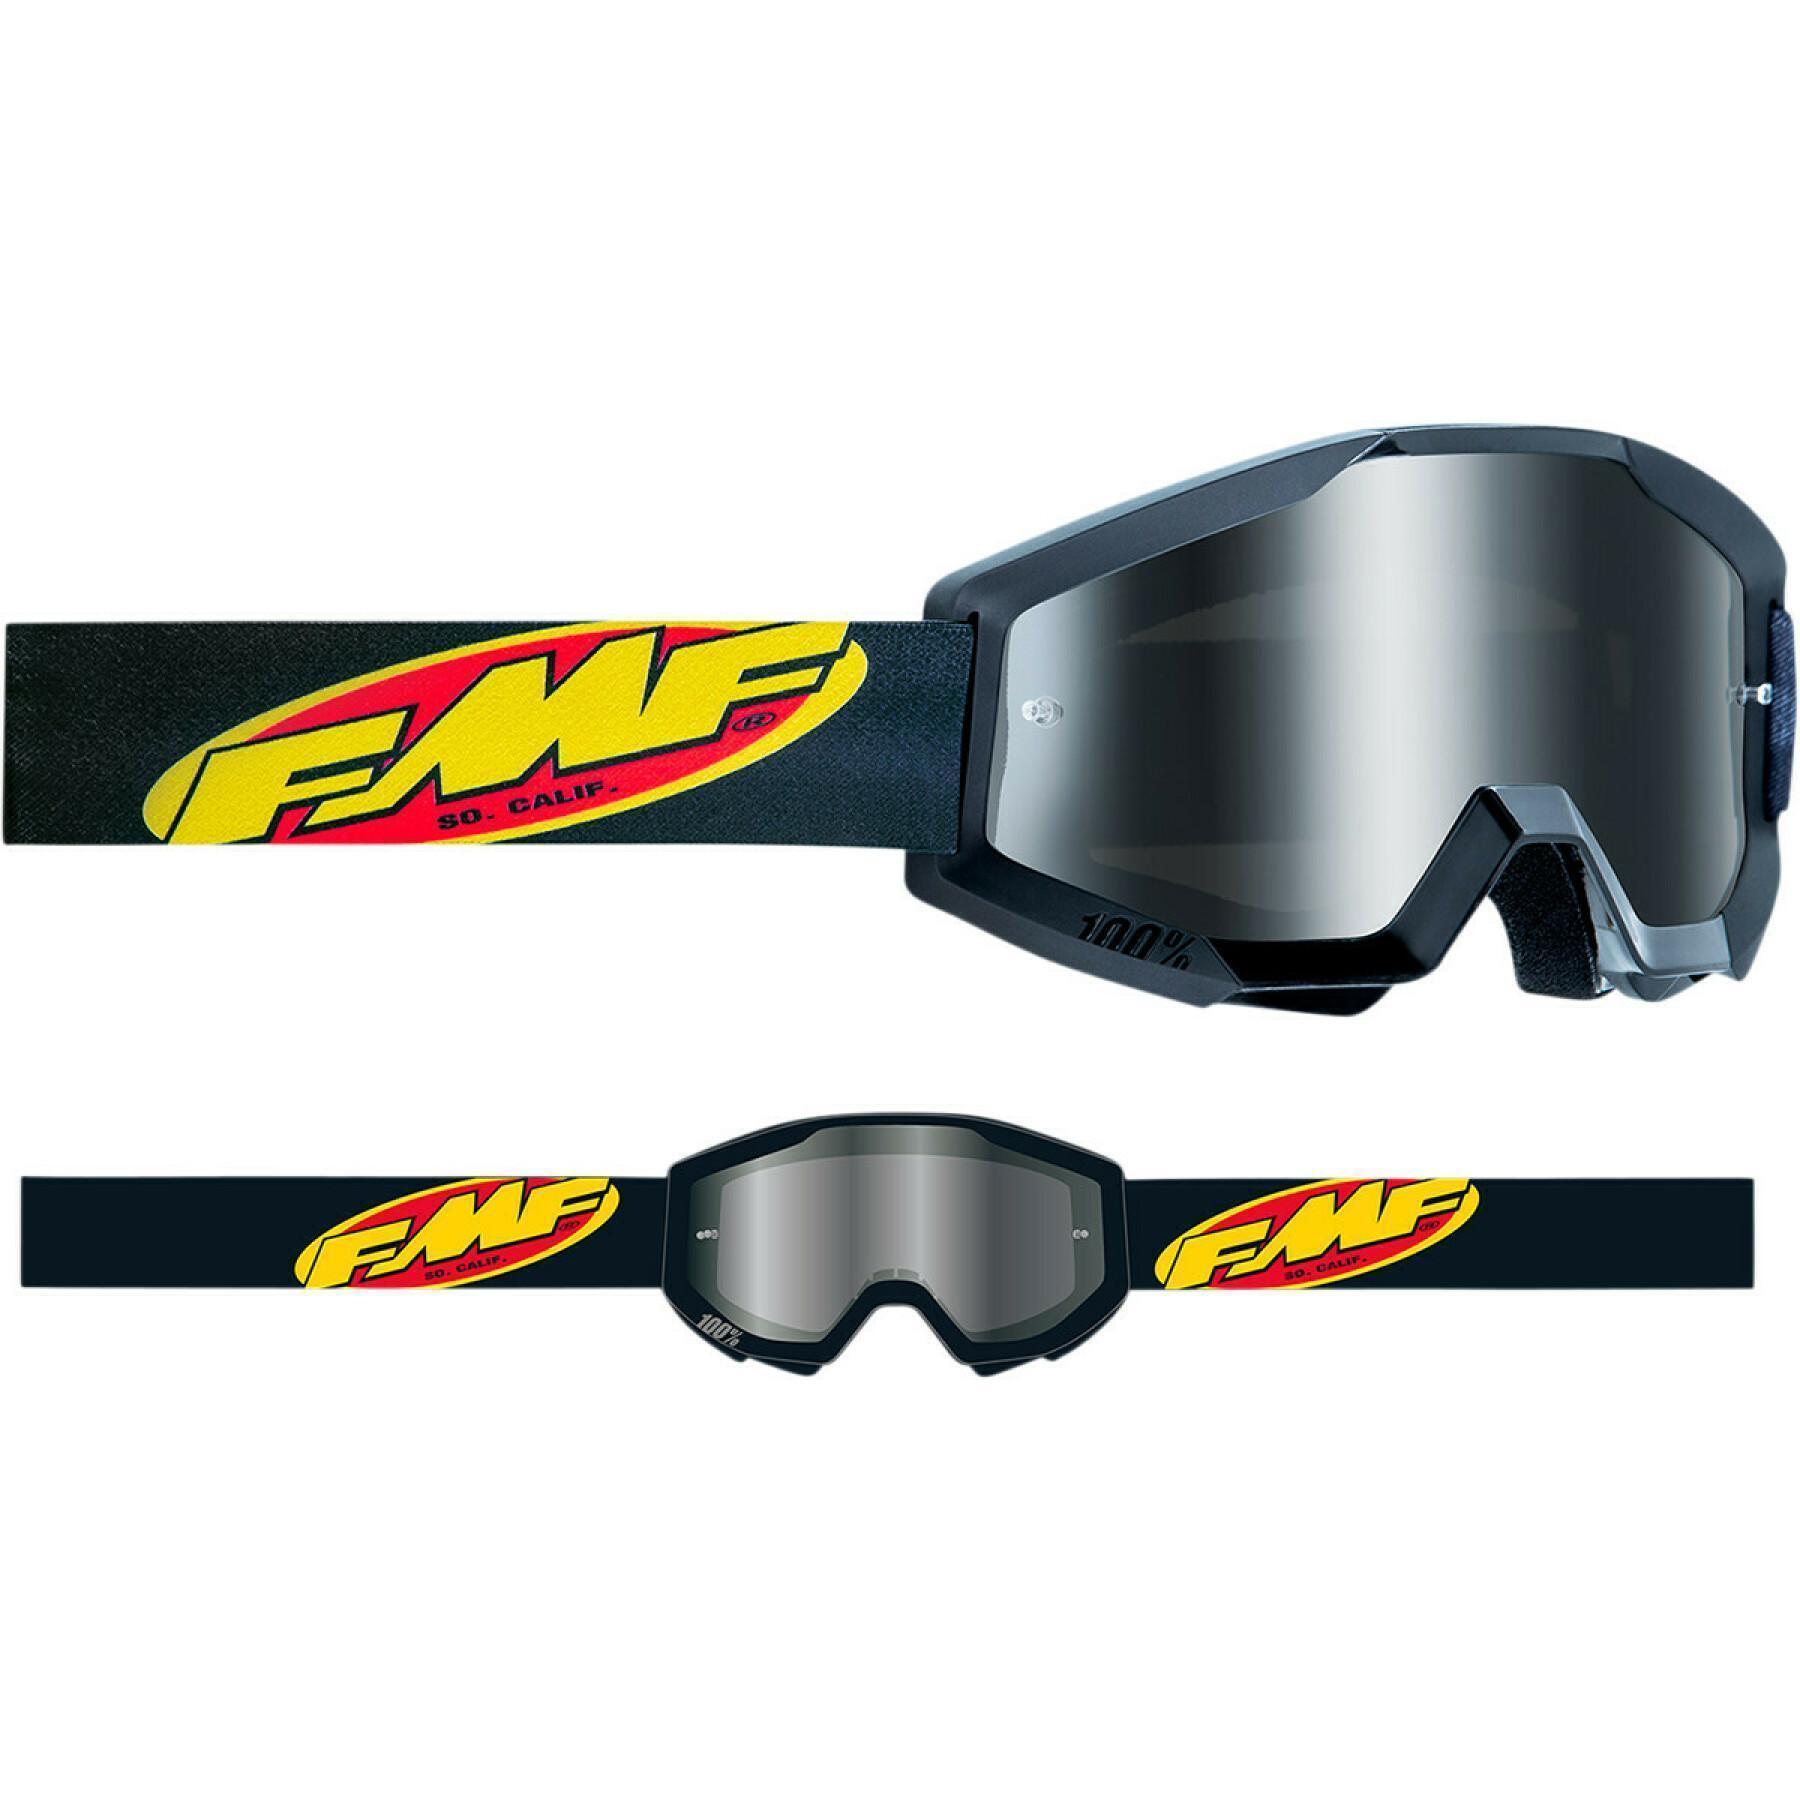 Motorrad-Crossbrille FMF Vision core sand